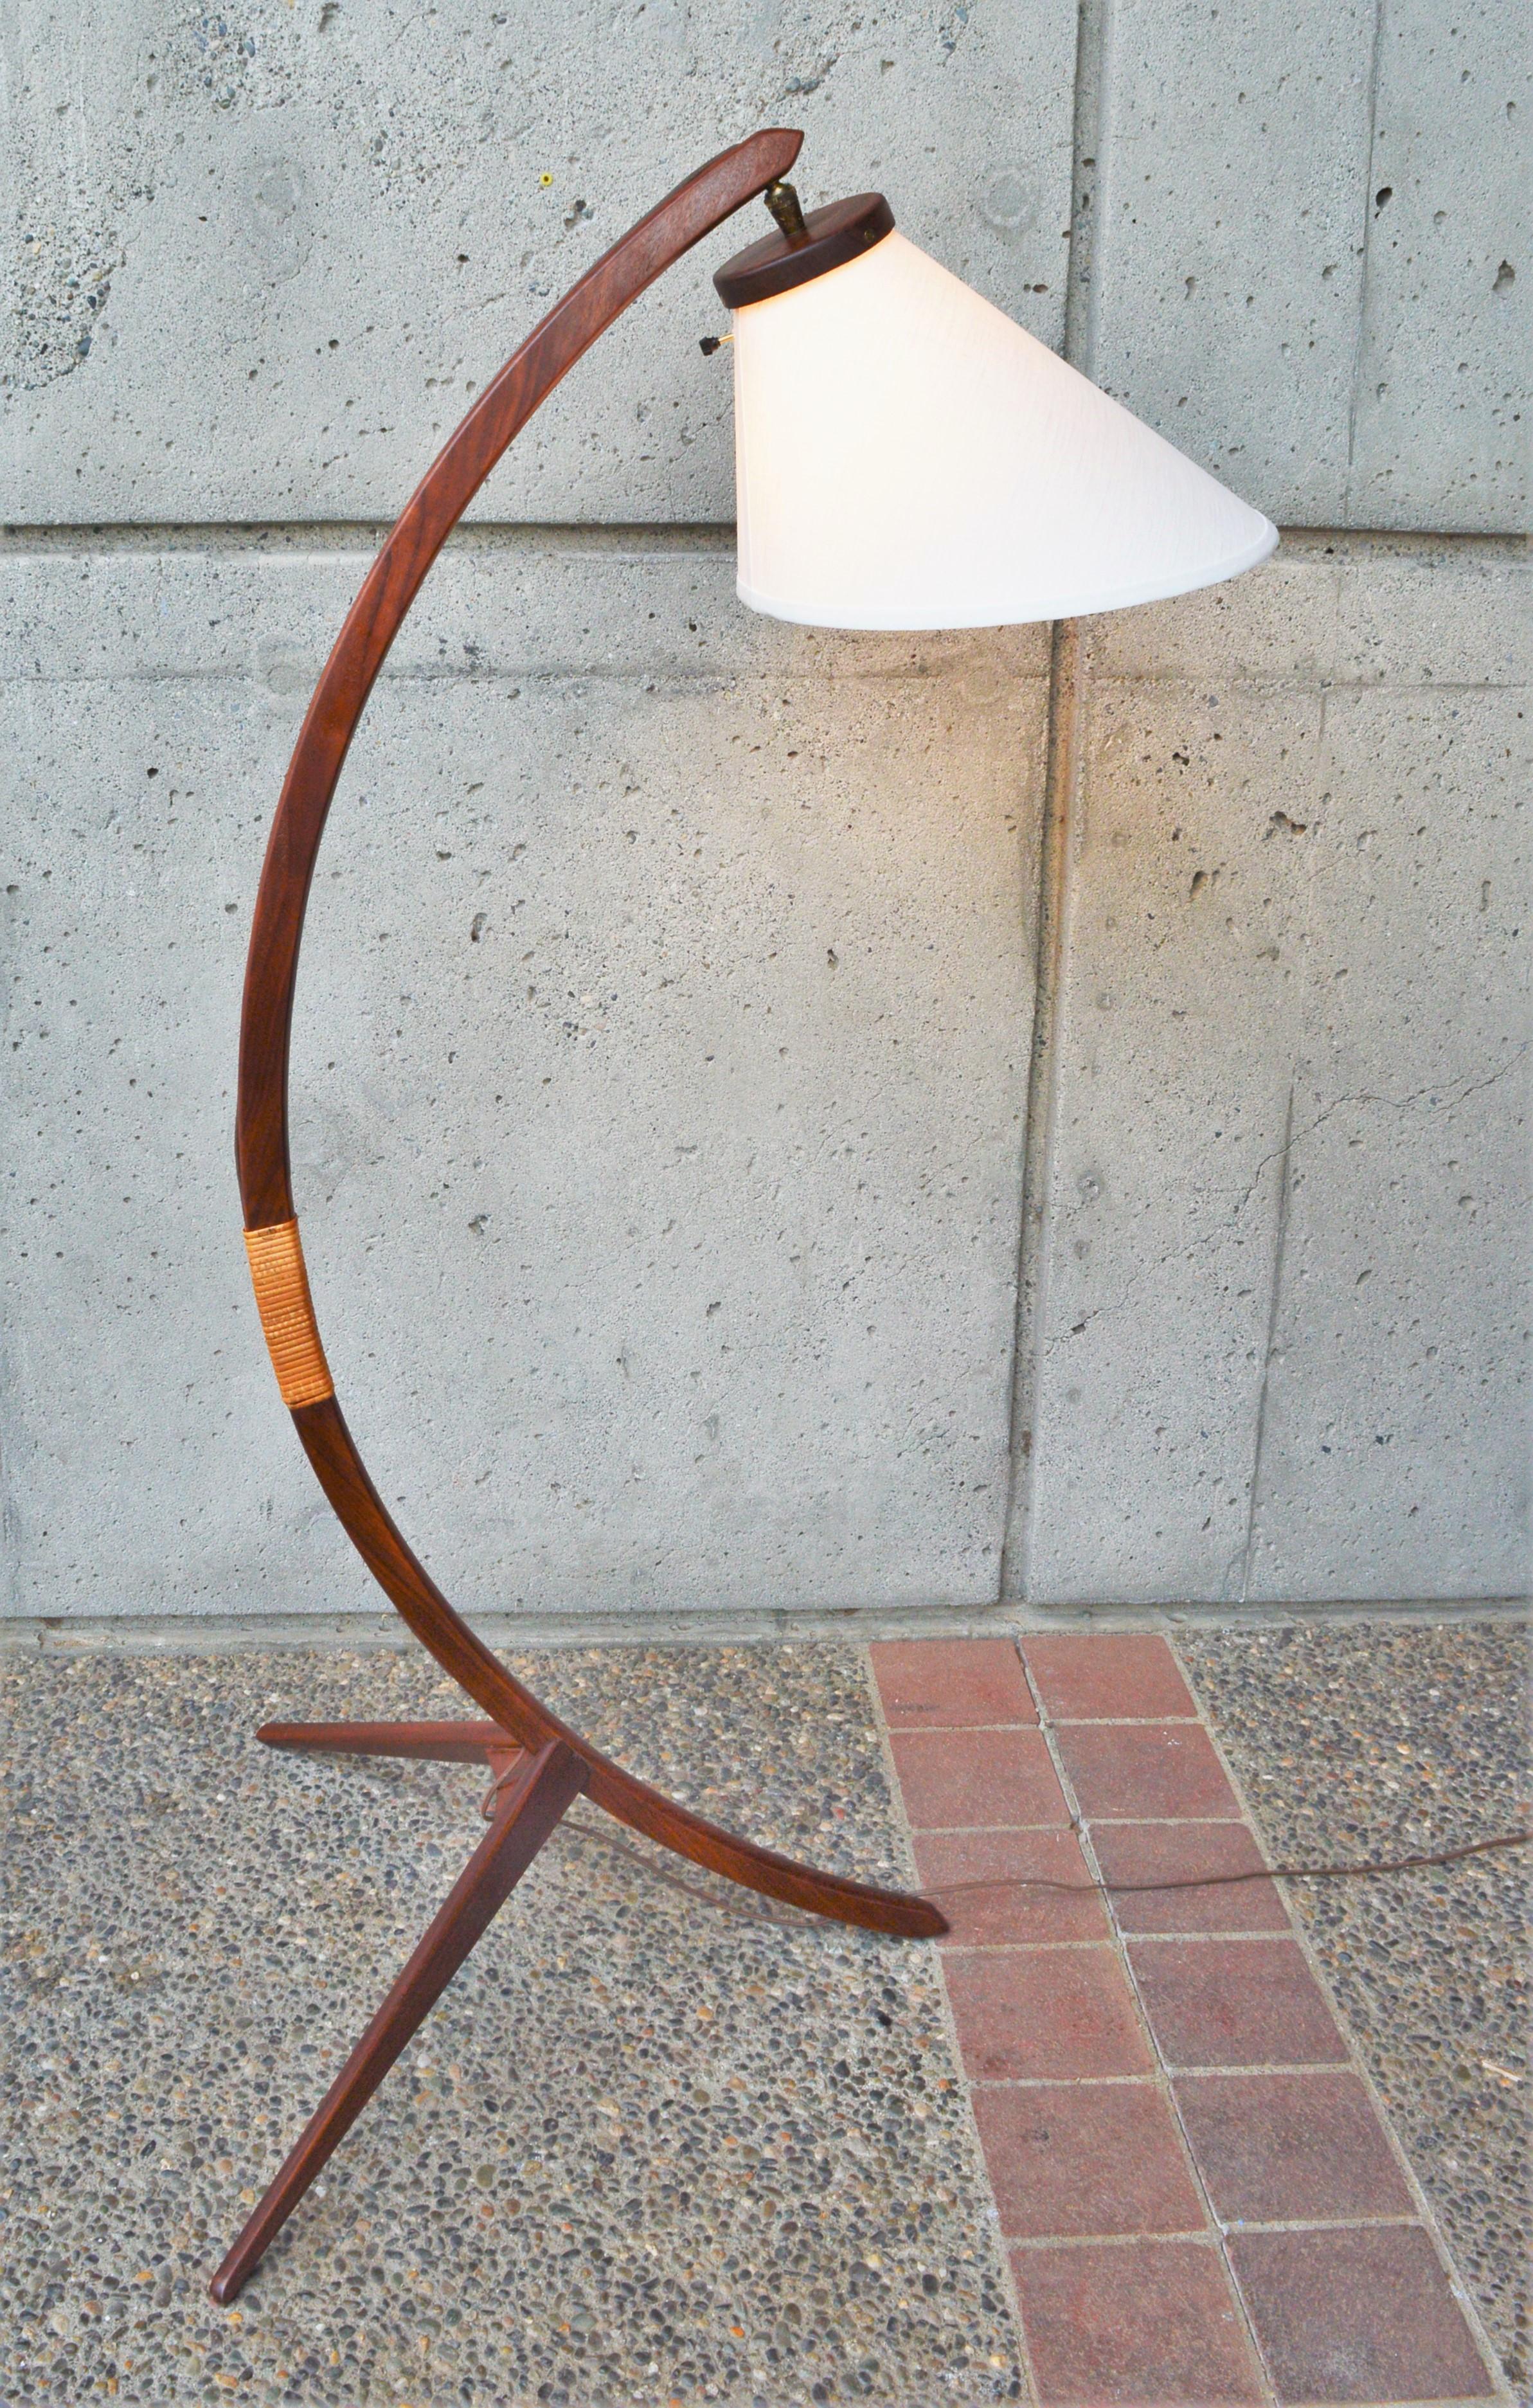 Danish Teak Arc or Bow Tripod Floor Lamp with New Bonnet Shade, Rispal Style 1